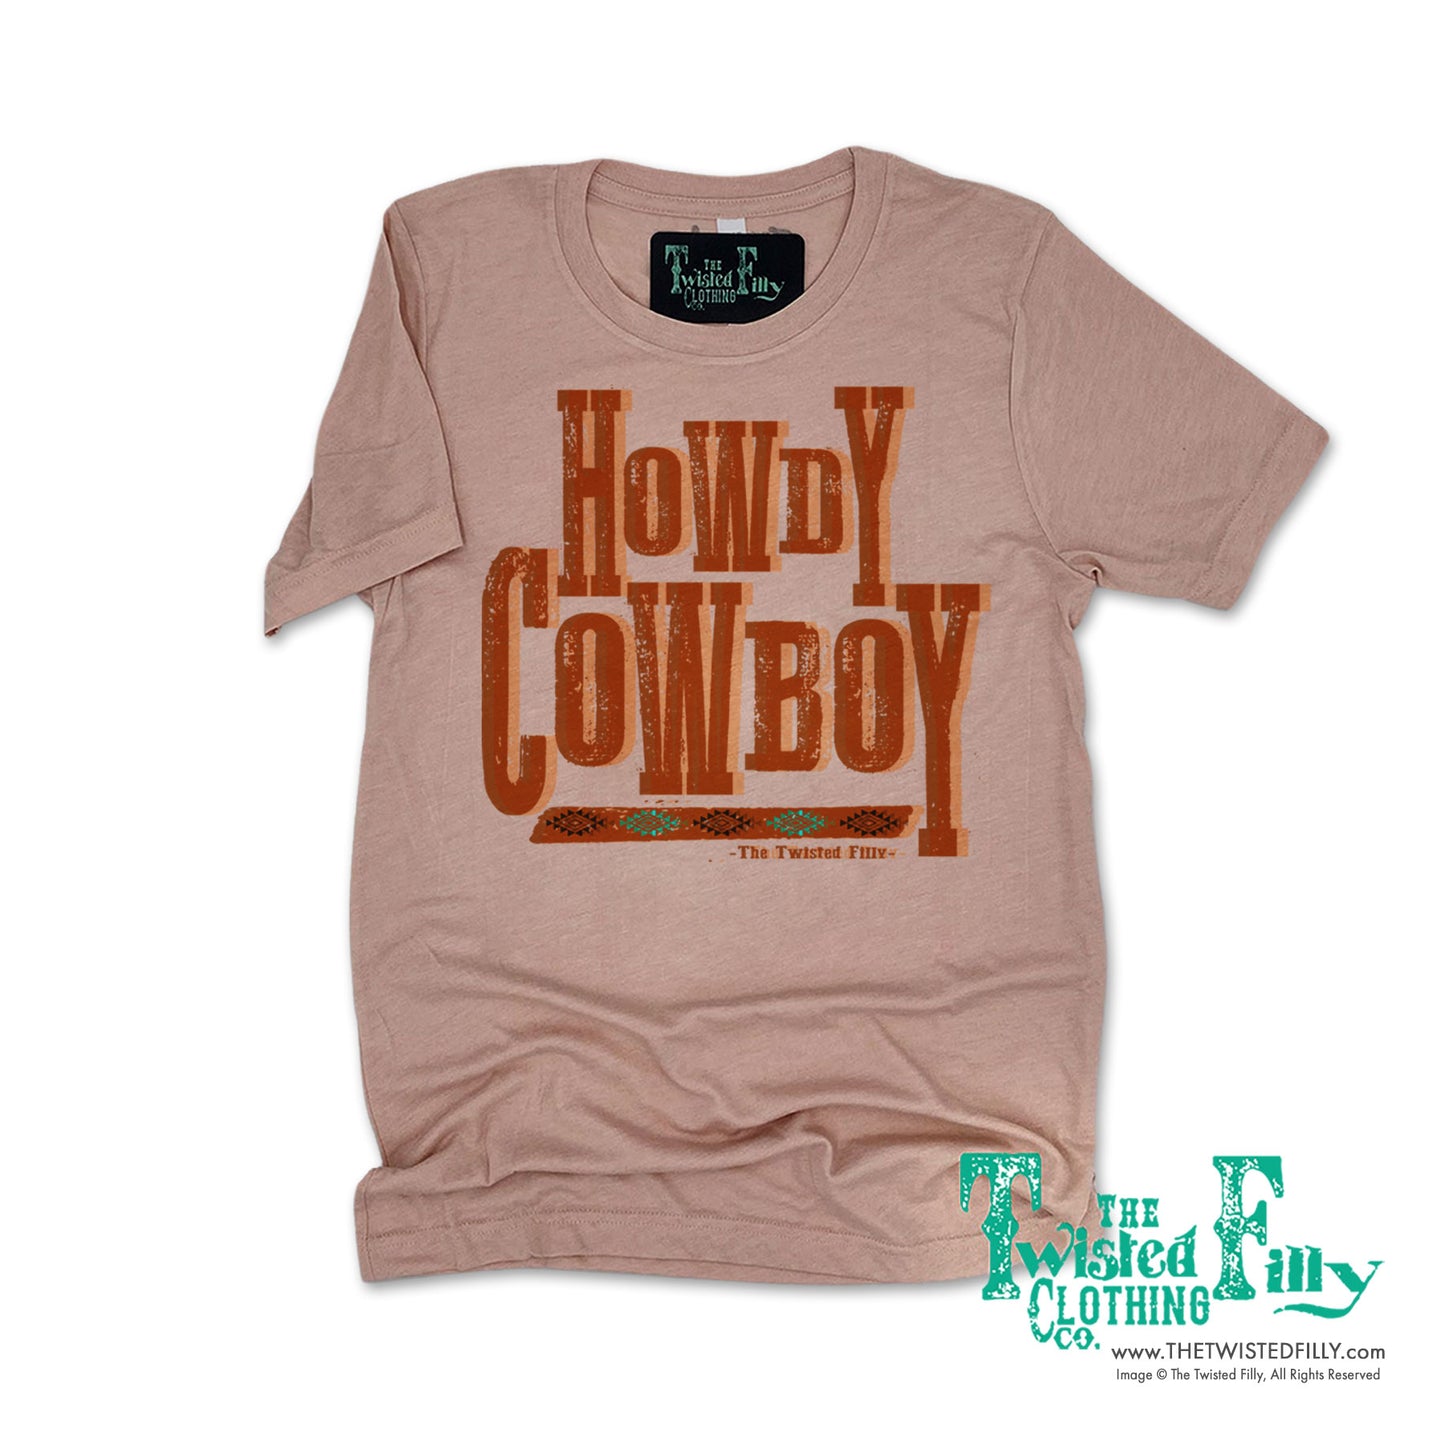 Howdy Cowboy - S/S Adult Crew Neck Ladies Tee - Assorted Colors